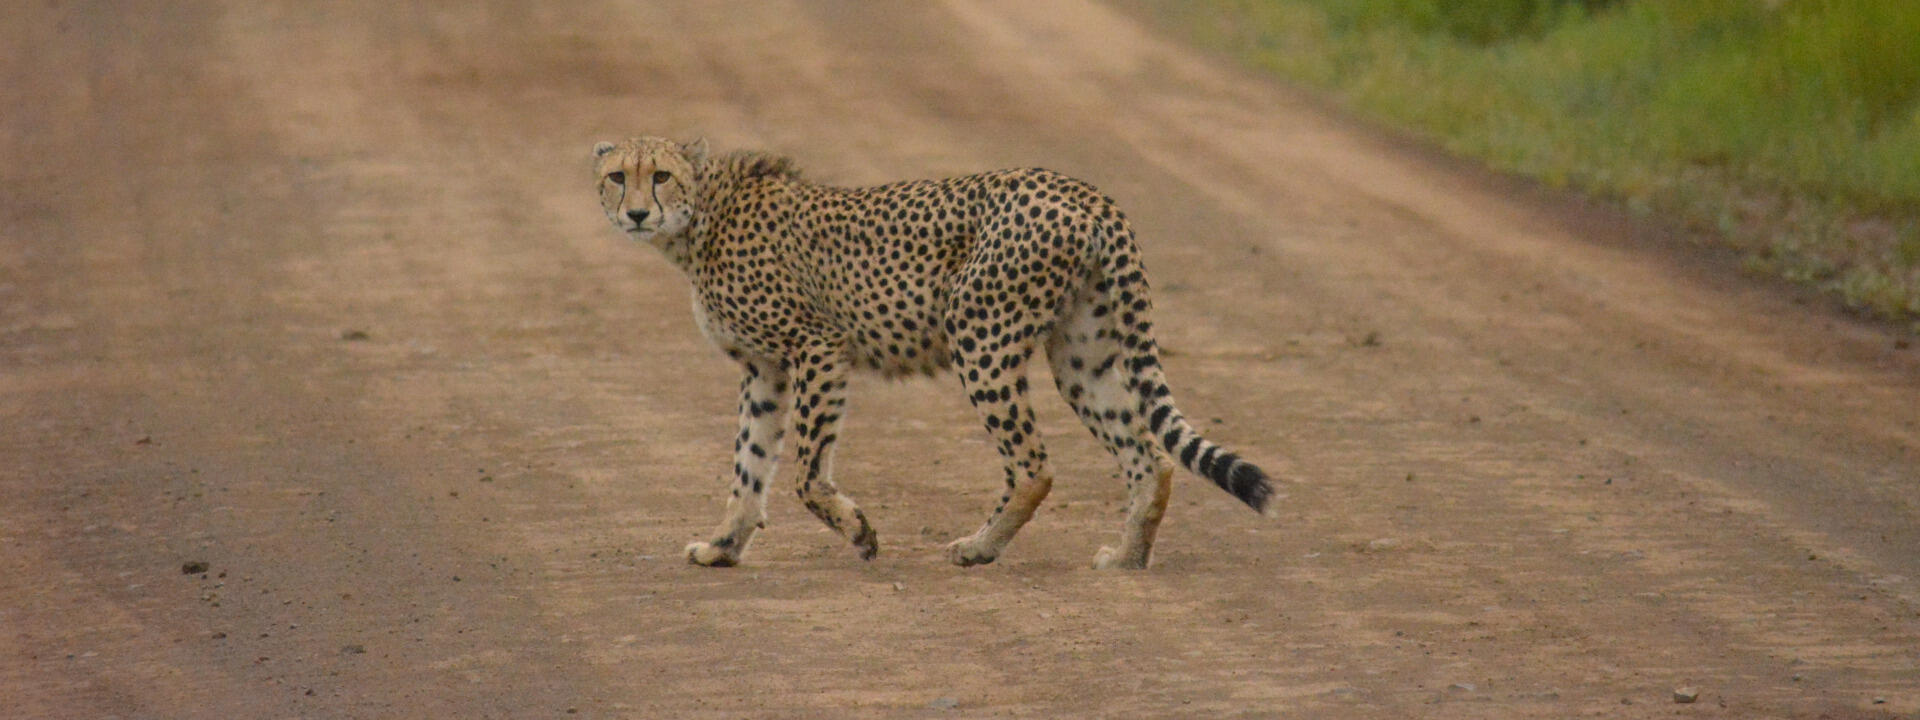 cheetah on road banner